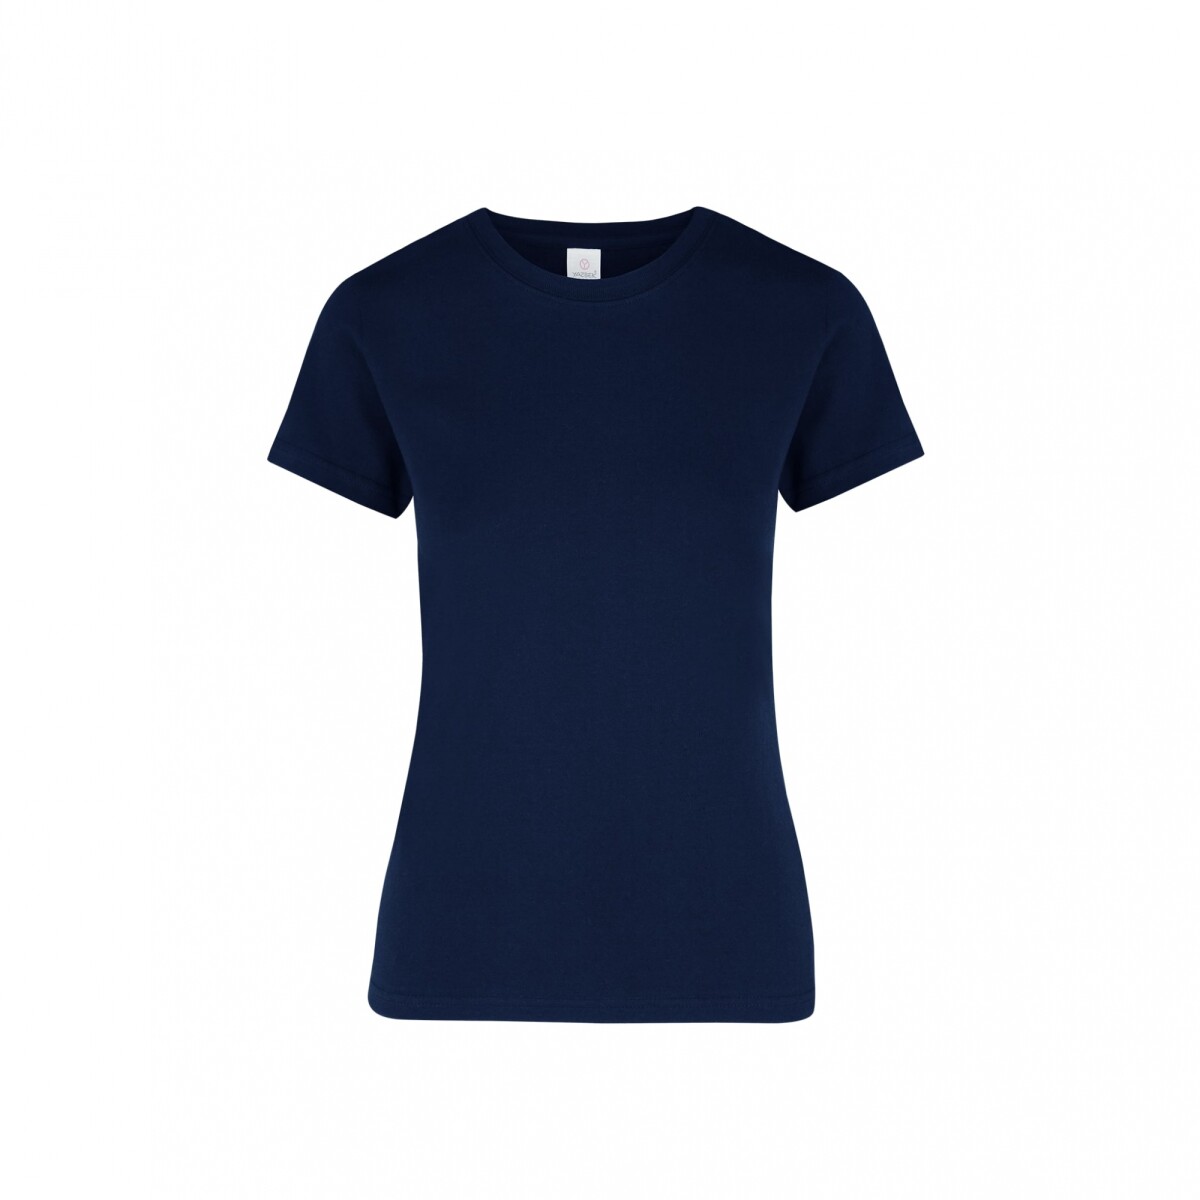 Camiseta a la base dama - Azul marino 